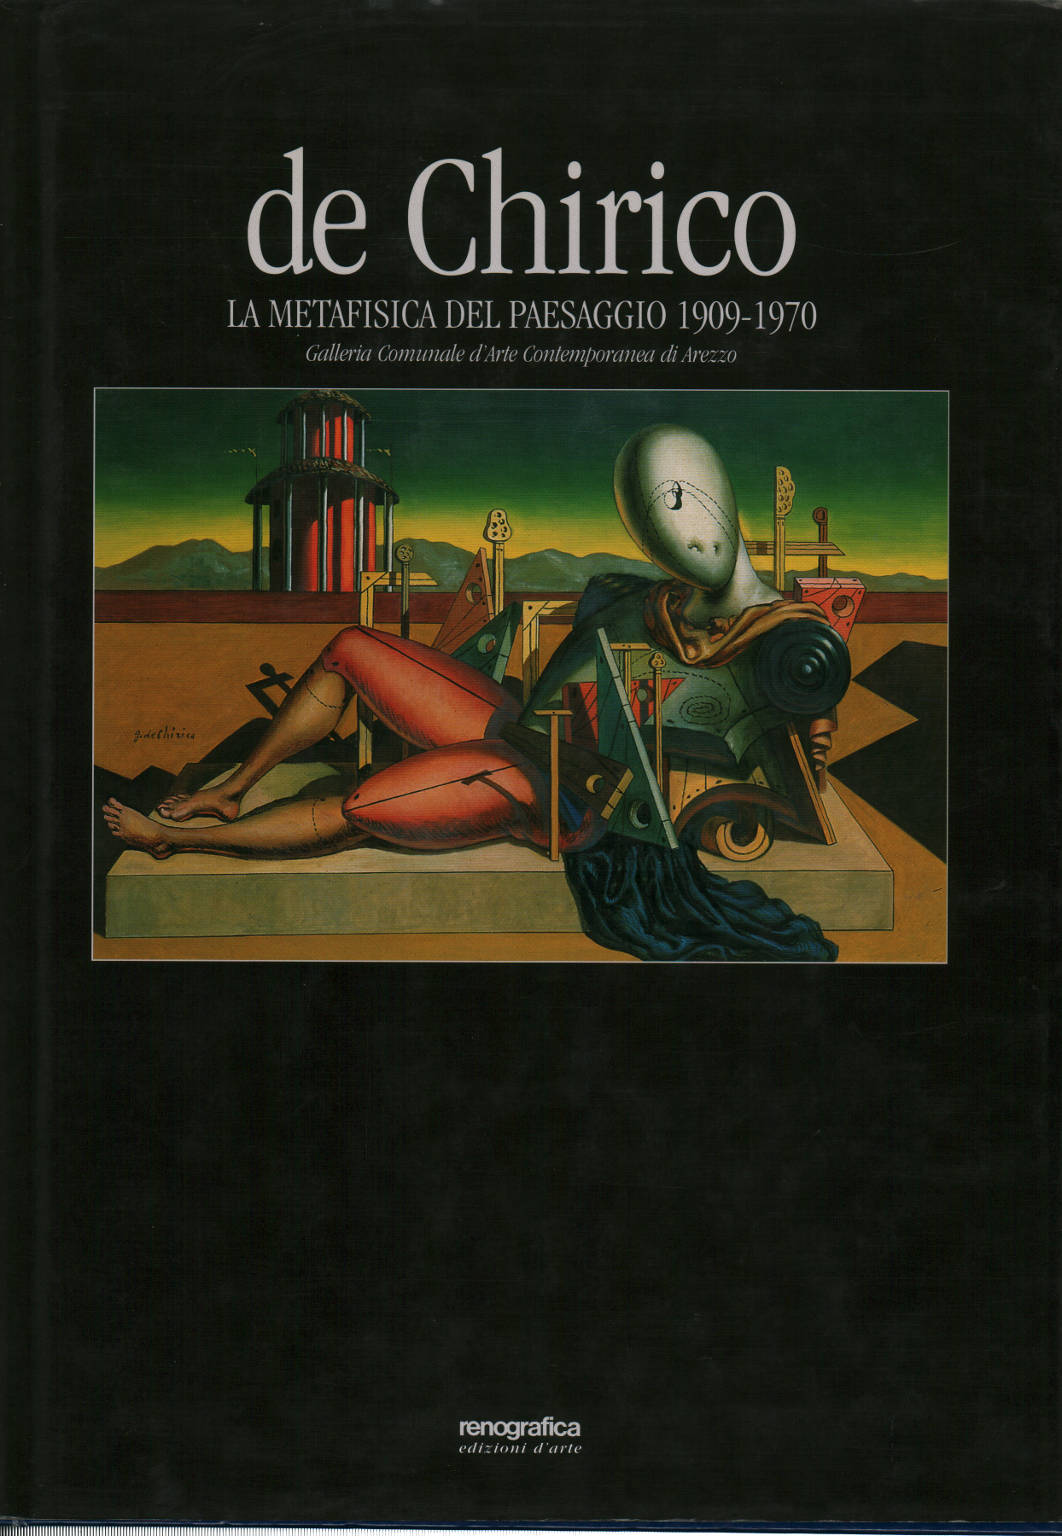 De Chirico: die metaphysik der landschaft 1909-1970, Maurizio Fagiolo Dell Arco